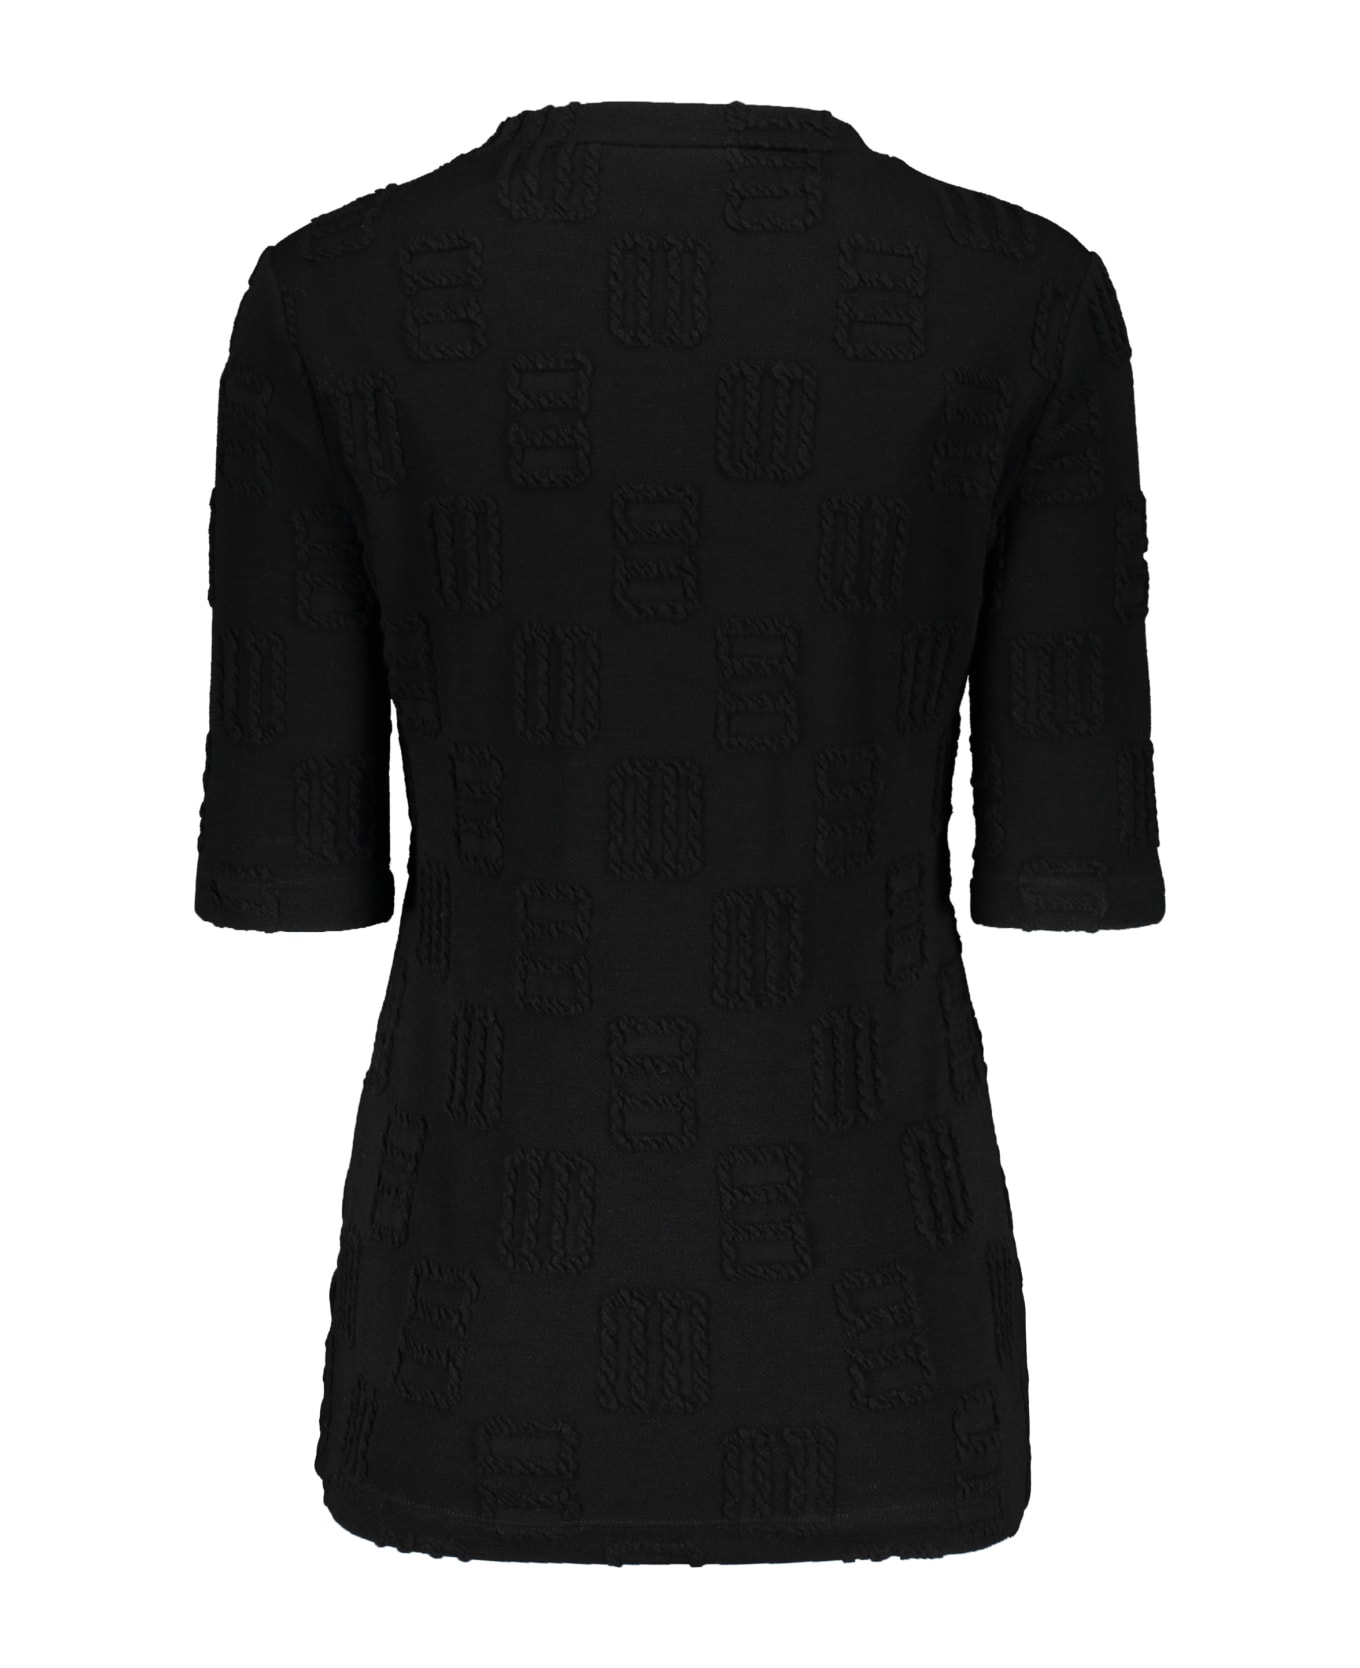 AMBUSH Wool Blend T-shirt - black